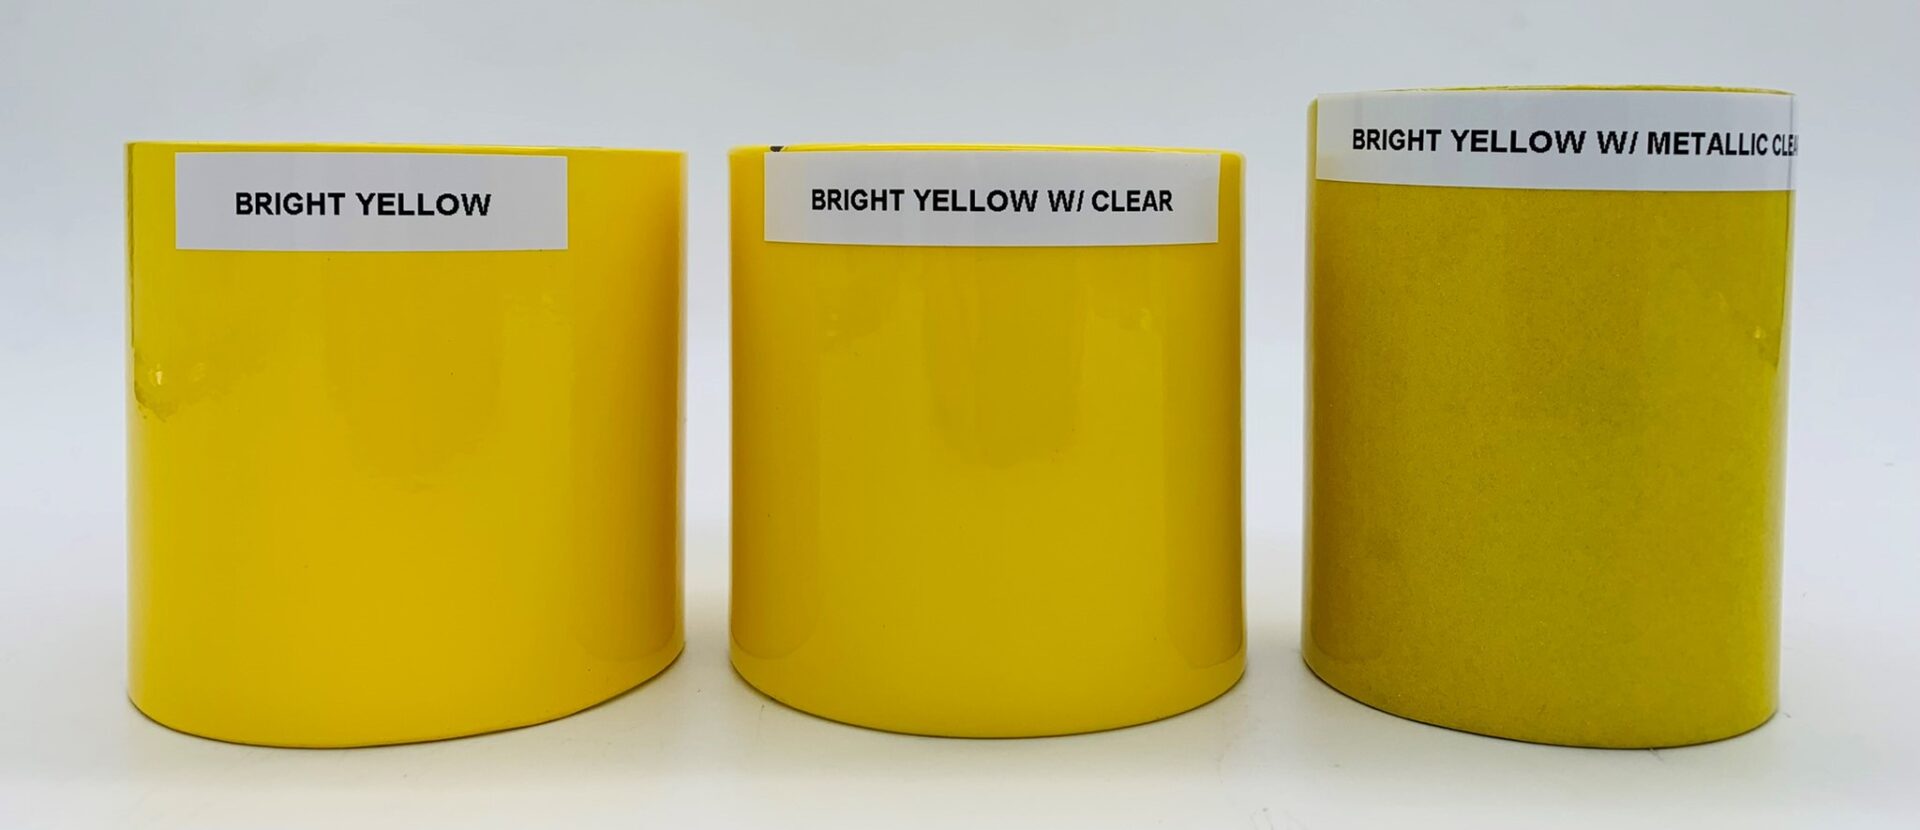 Three bright yellow tubes with metallic